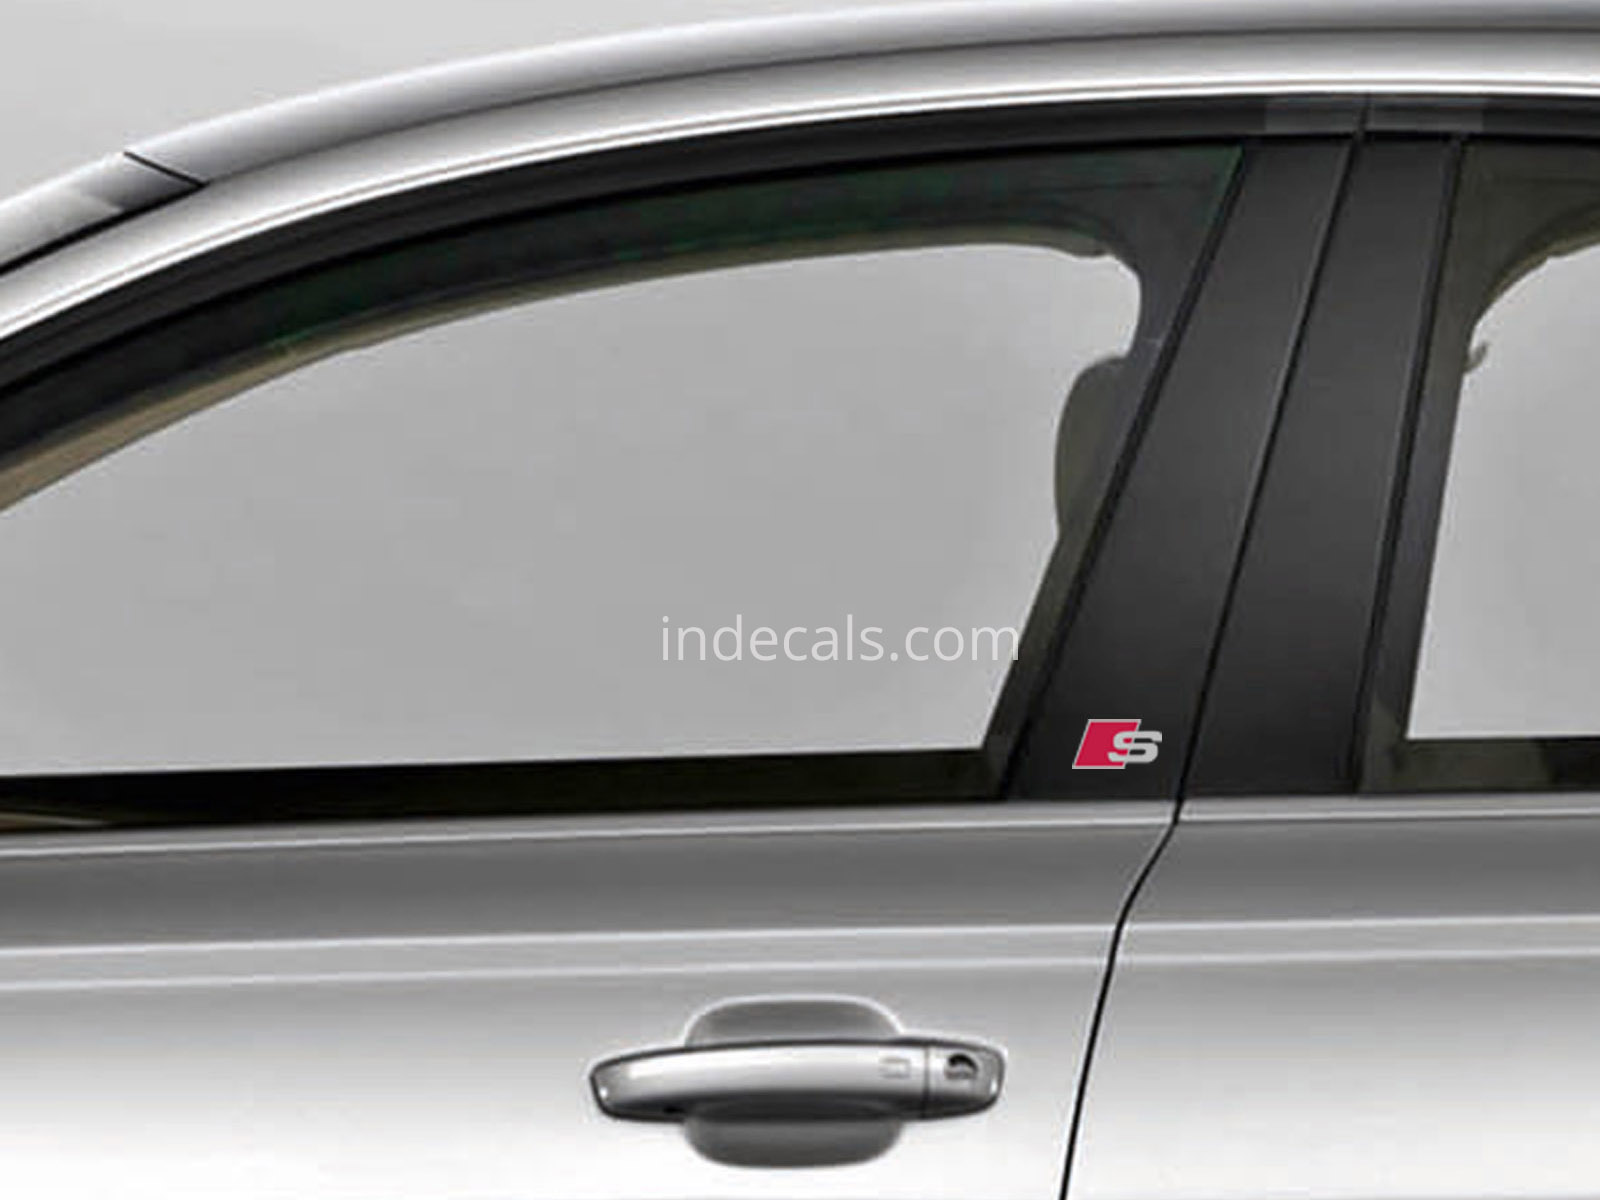 2 x Audi S-Line Stickers for Door Window Trim - Silver + Red